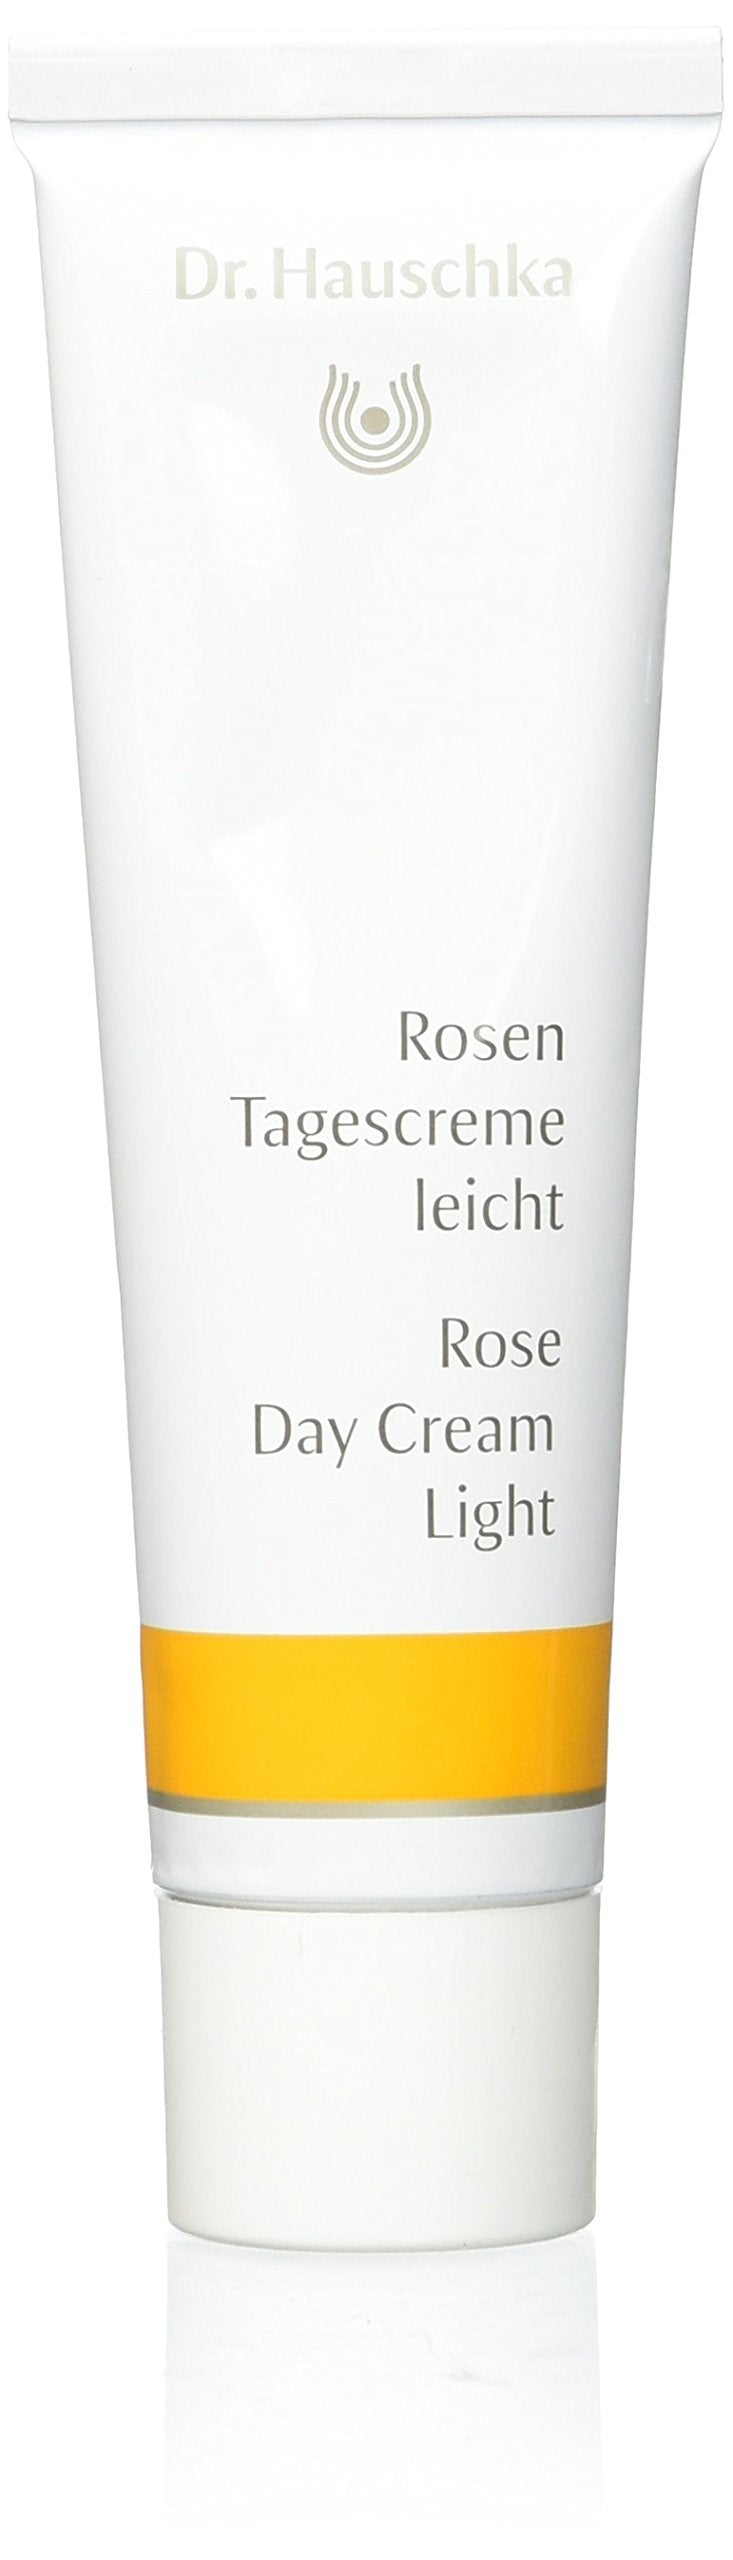 [Australia] - Dr. Hauschka Rose Day Cream light 30 ml 